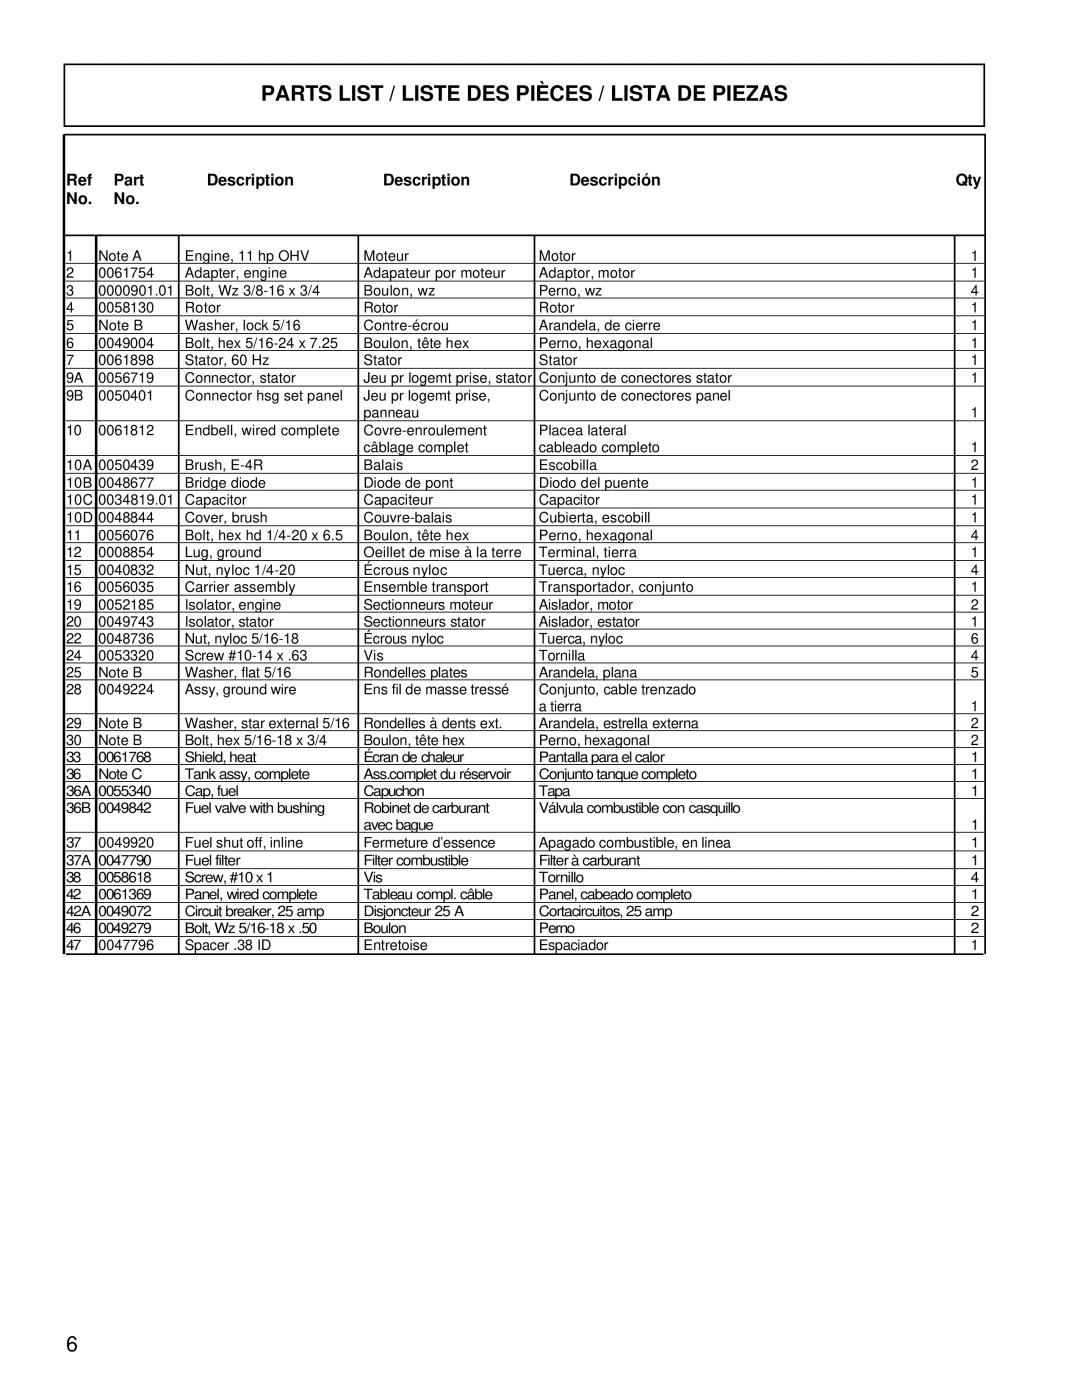 Coleman PM0525300.18 manual Parts List / Liste Des Pièces / Lista De Piezas, Description, Descripción 